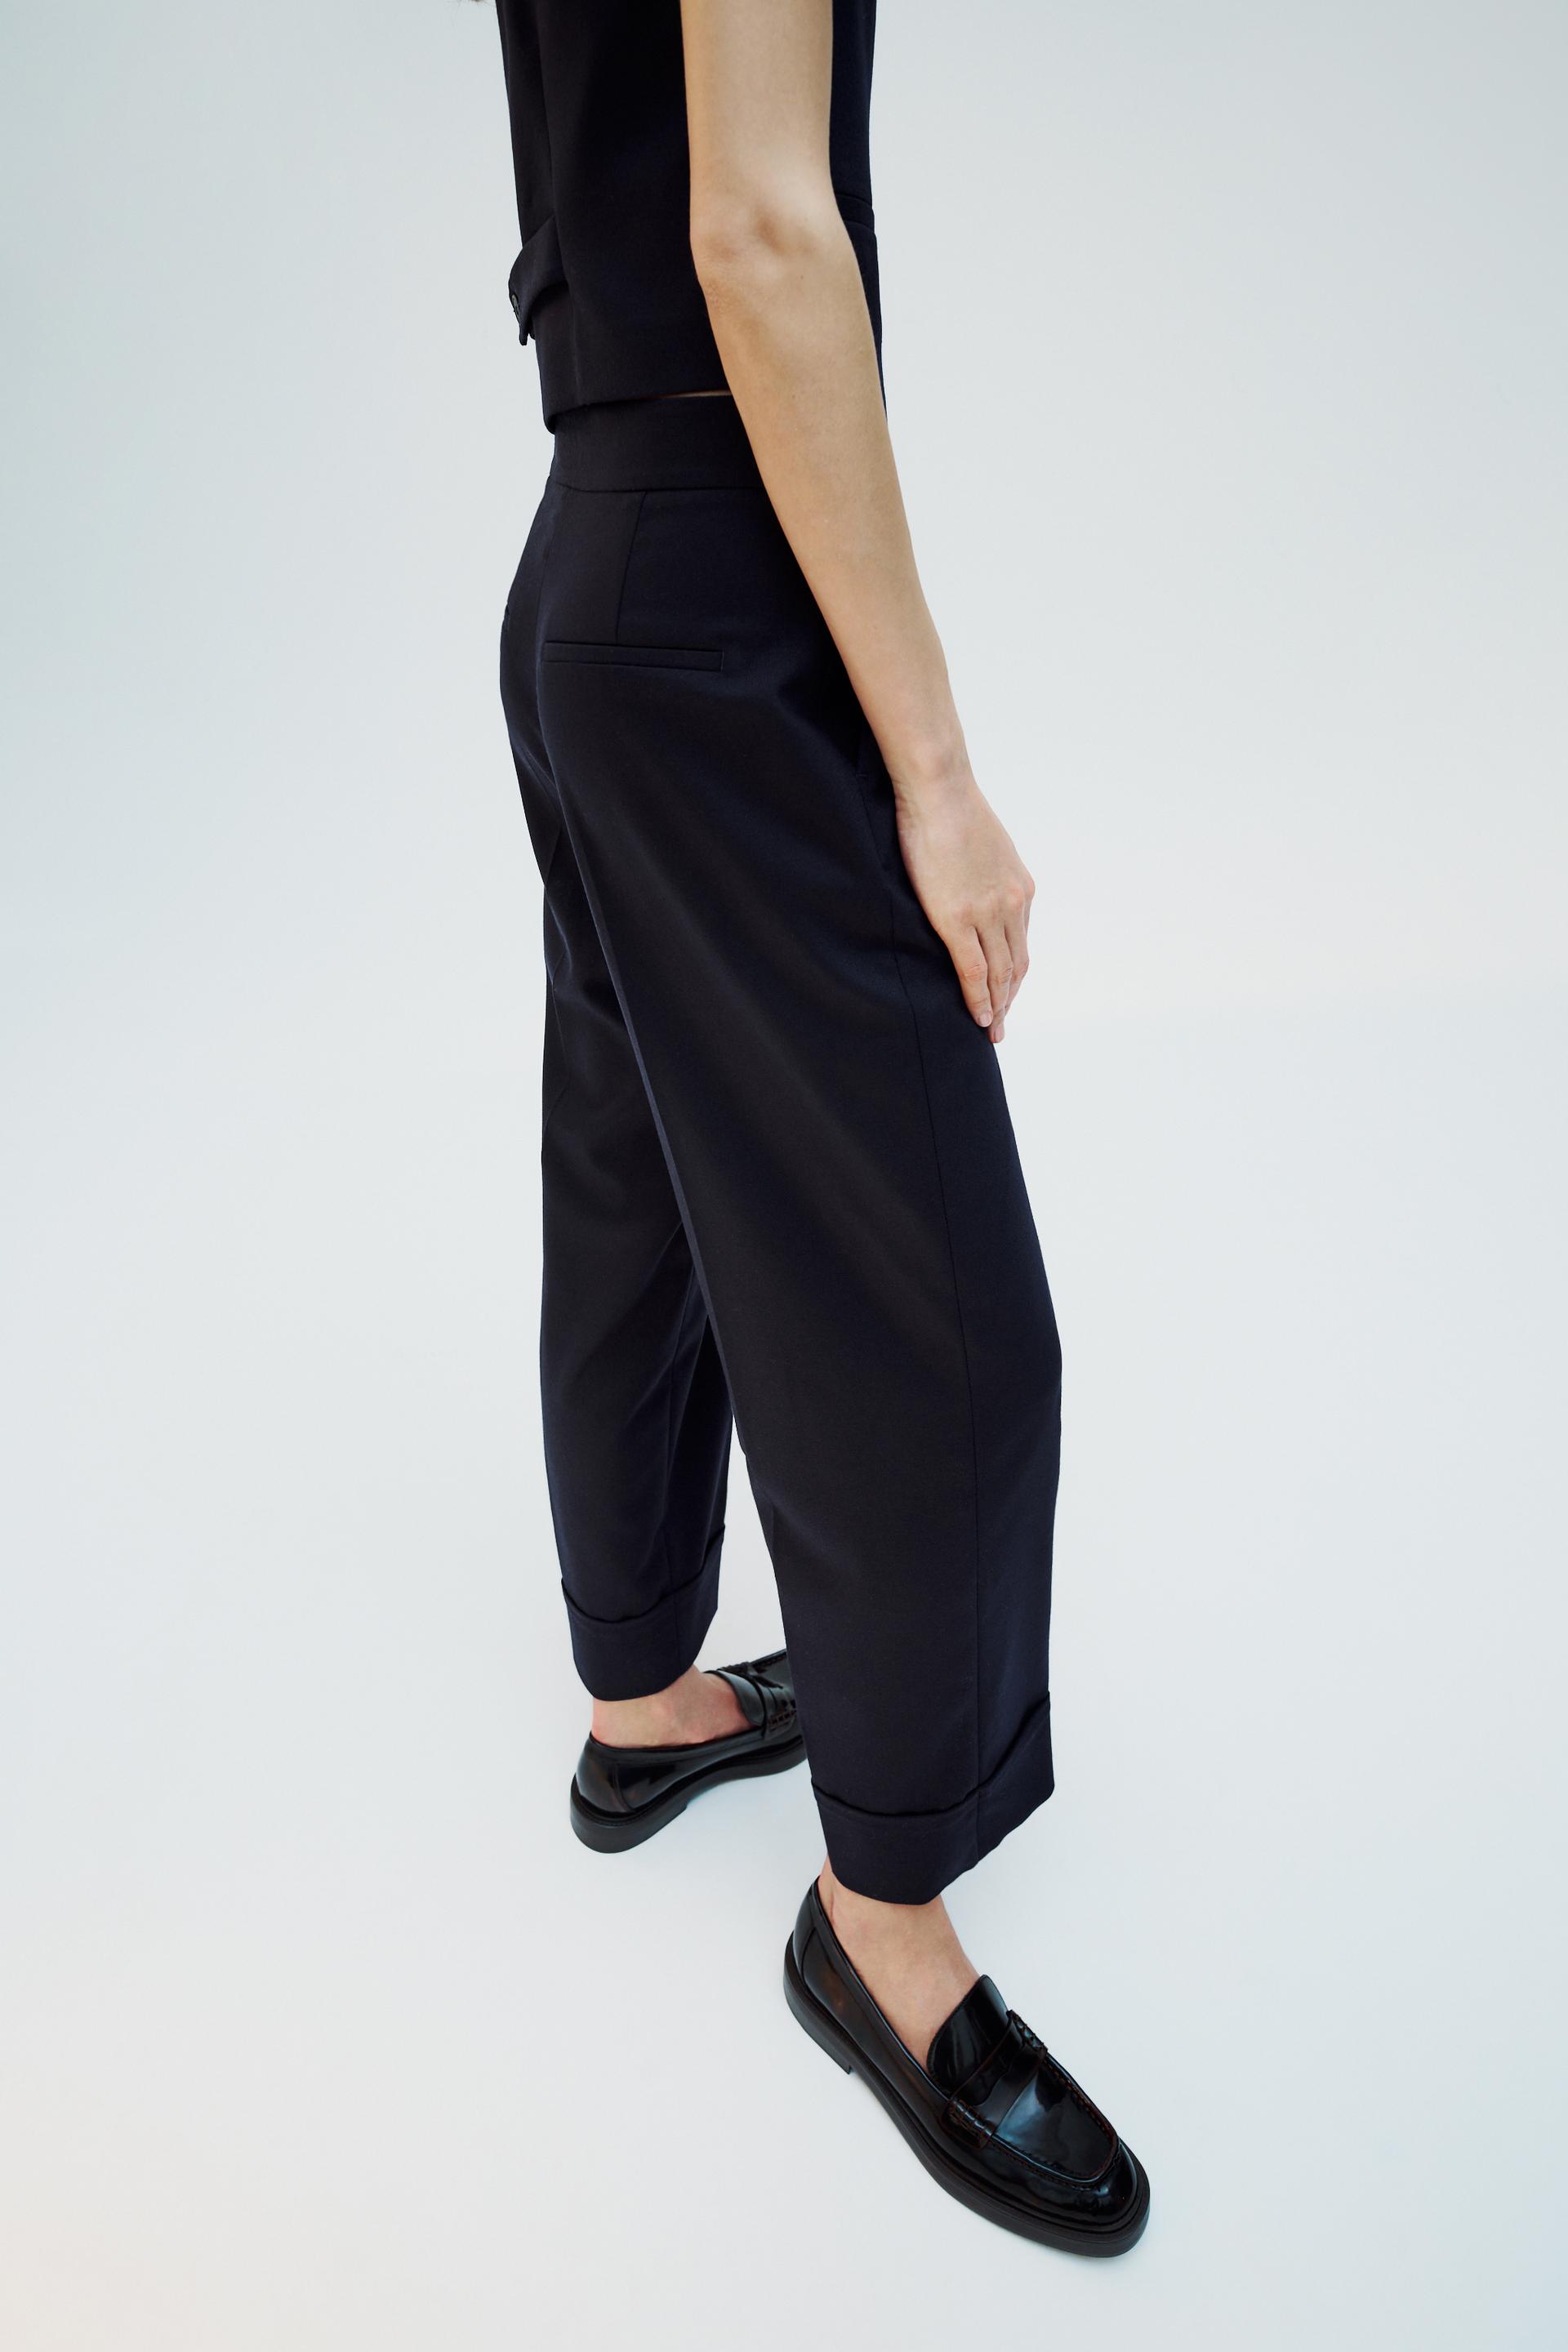 ZARA Pants Women XS Blue Black Slim Leg Damask Print Zipper Clasps Pockets  - $26 - From Dawn